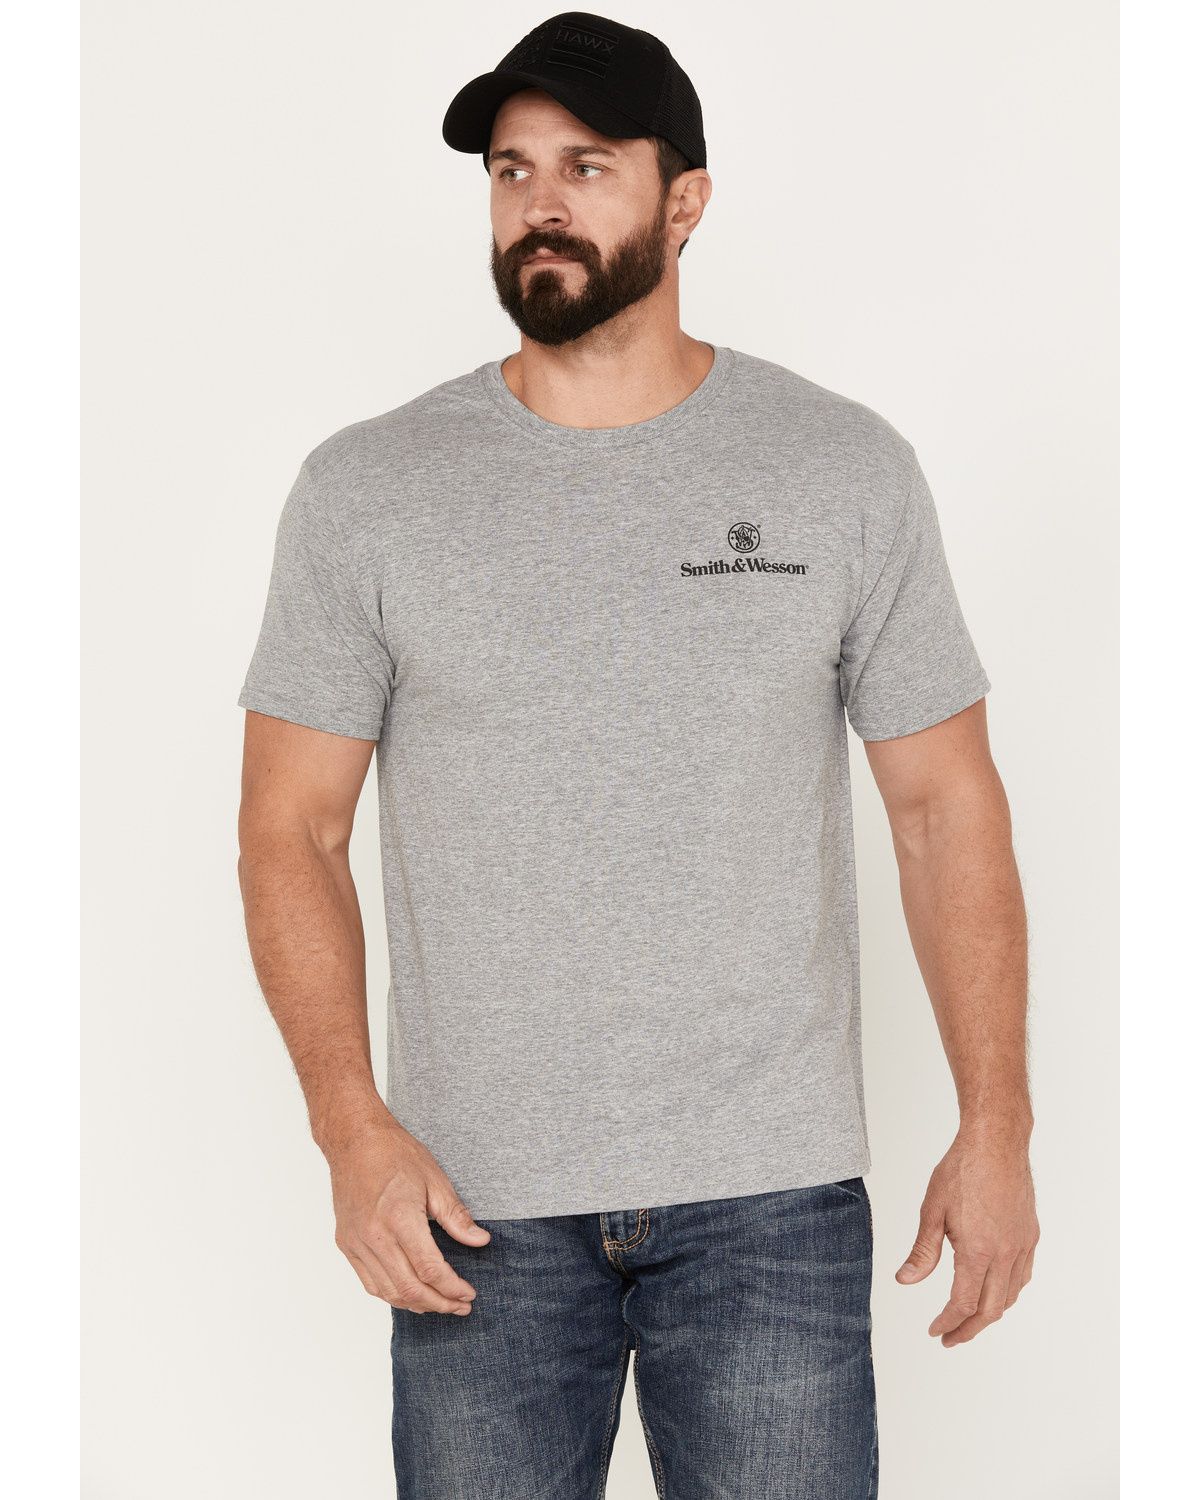 Smith & Wesson Men's American Original Horseback Short Sleeve Graphic T-Shirt